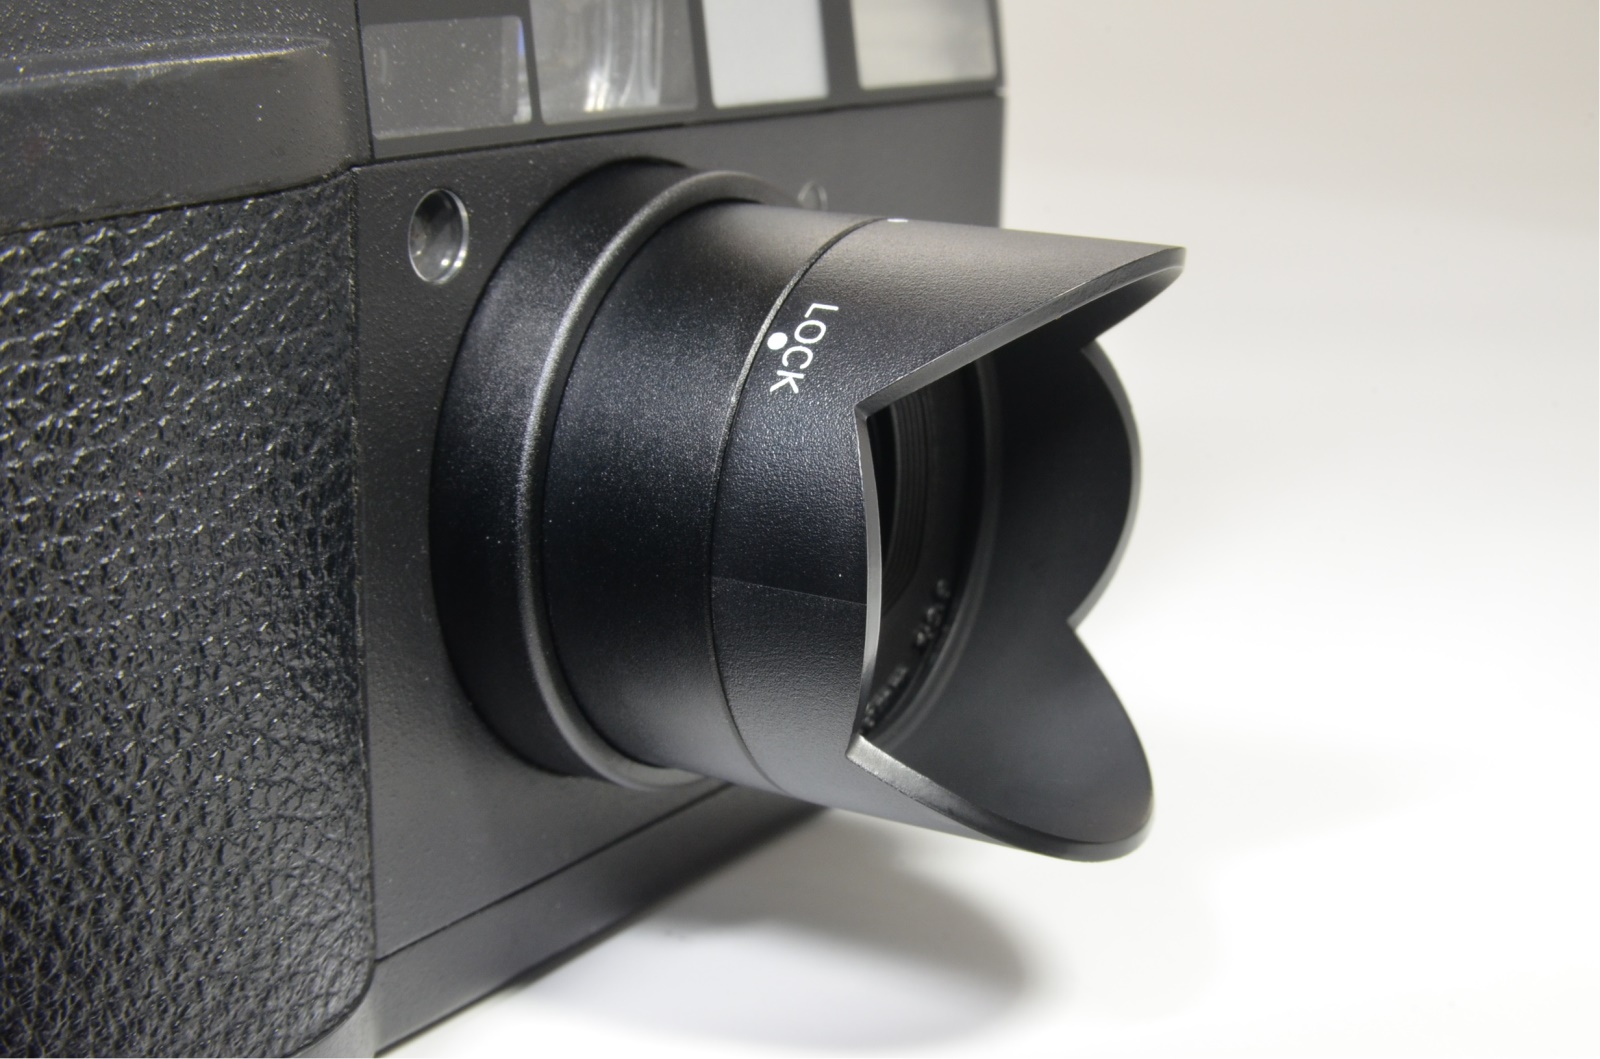 ricoh gr1v black 28mm f2.8 point & shoot film camera shooting tested